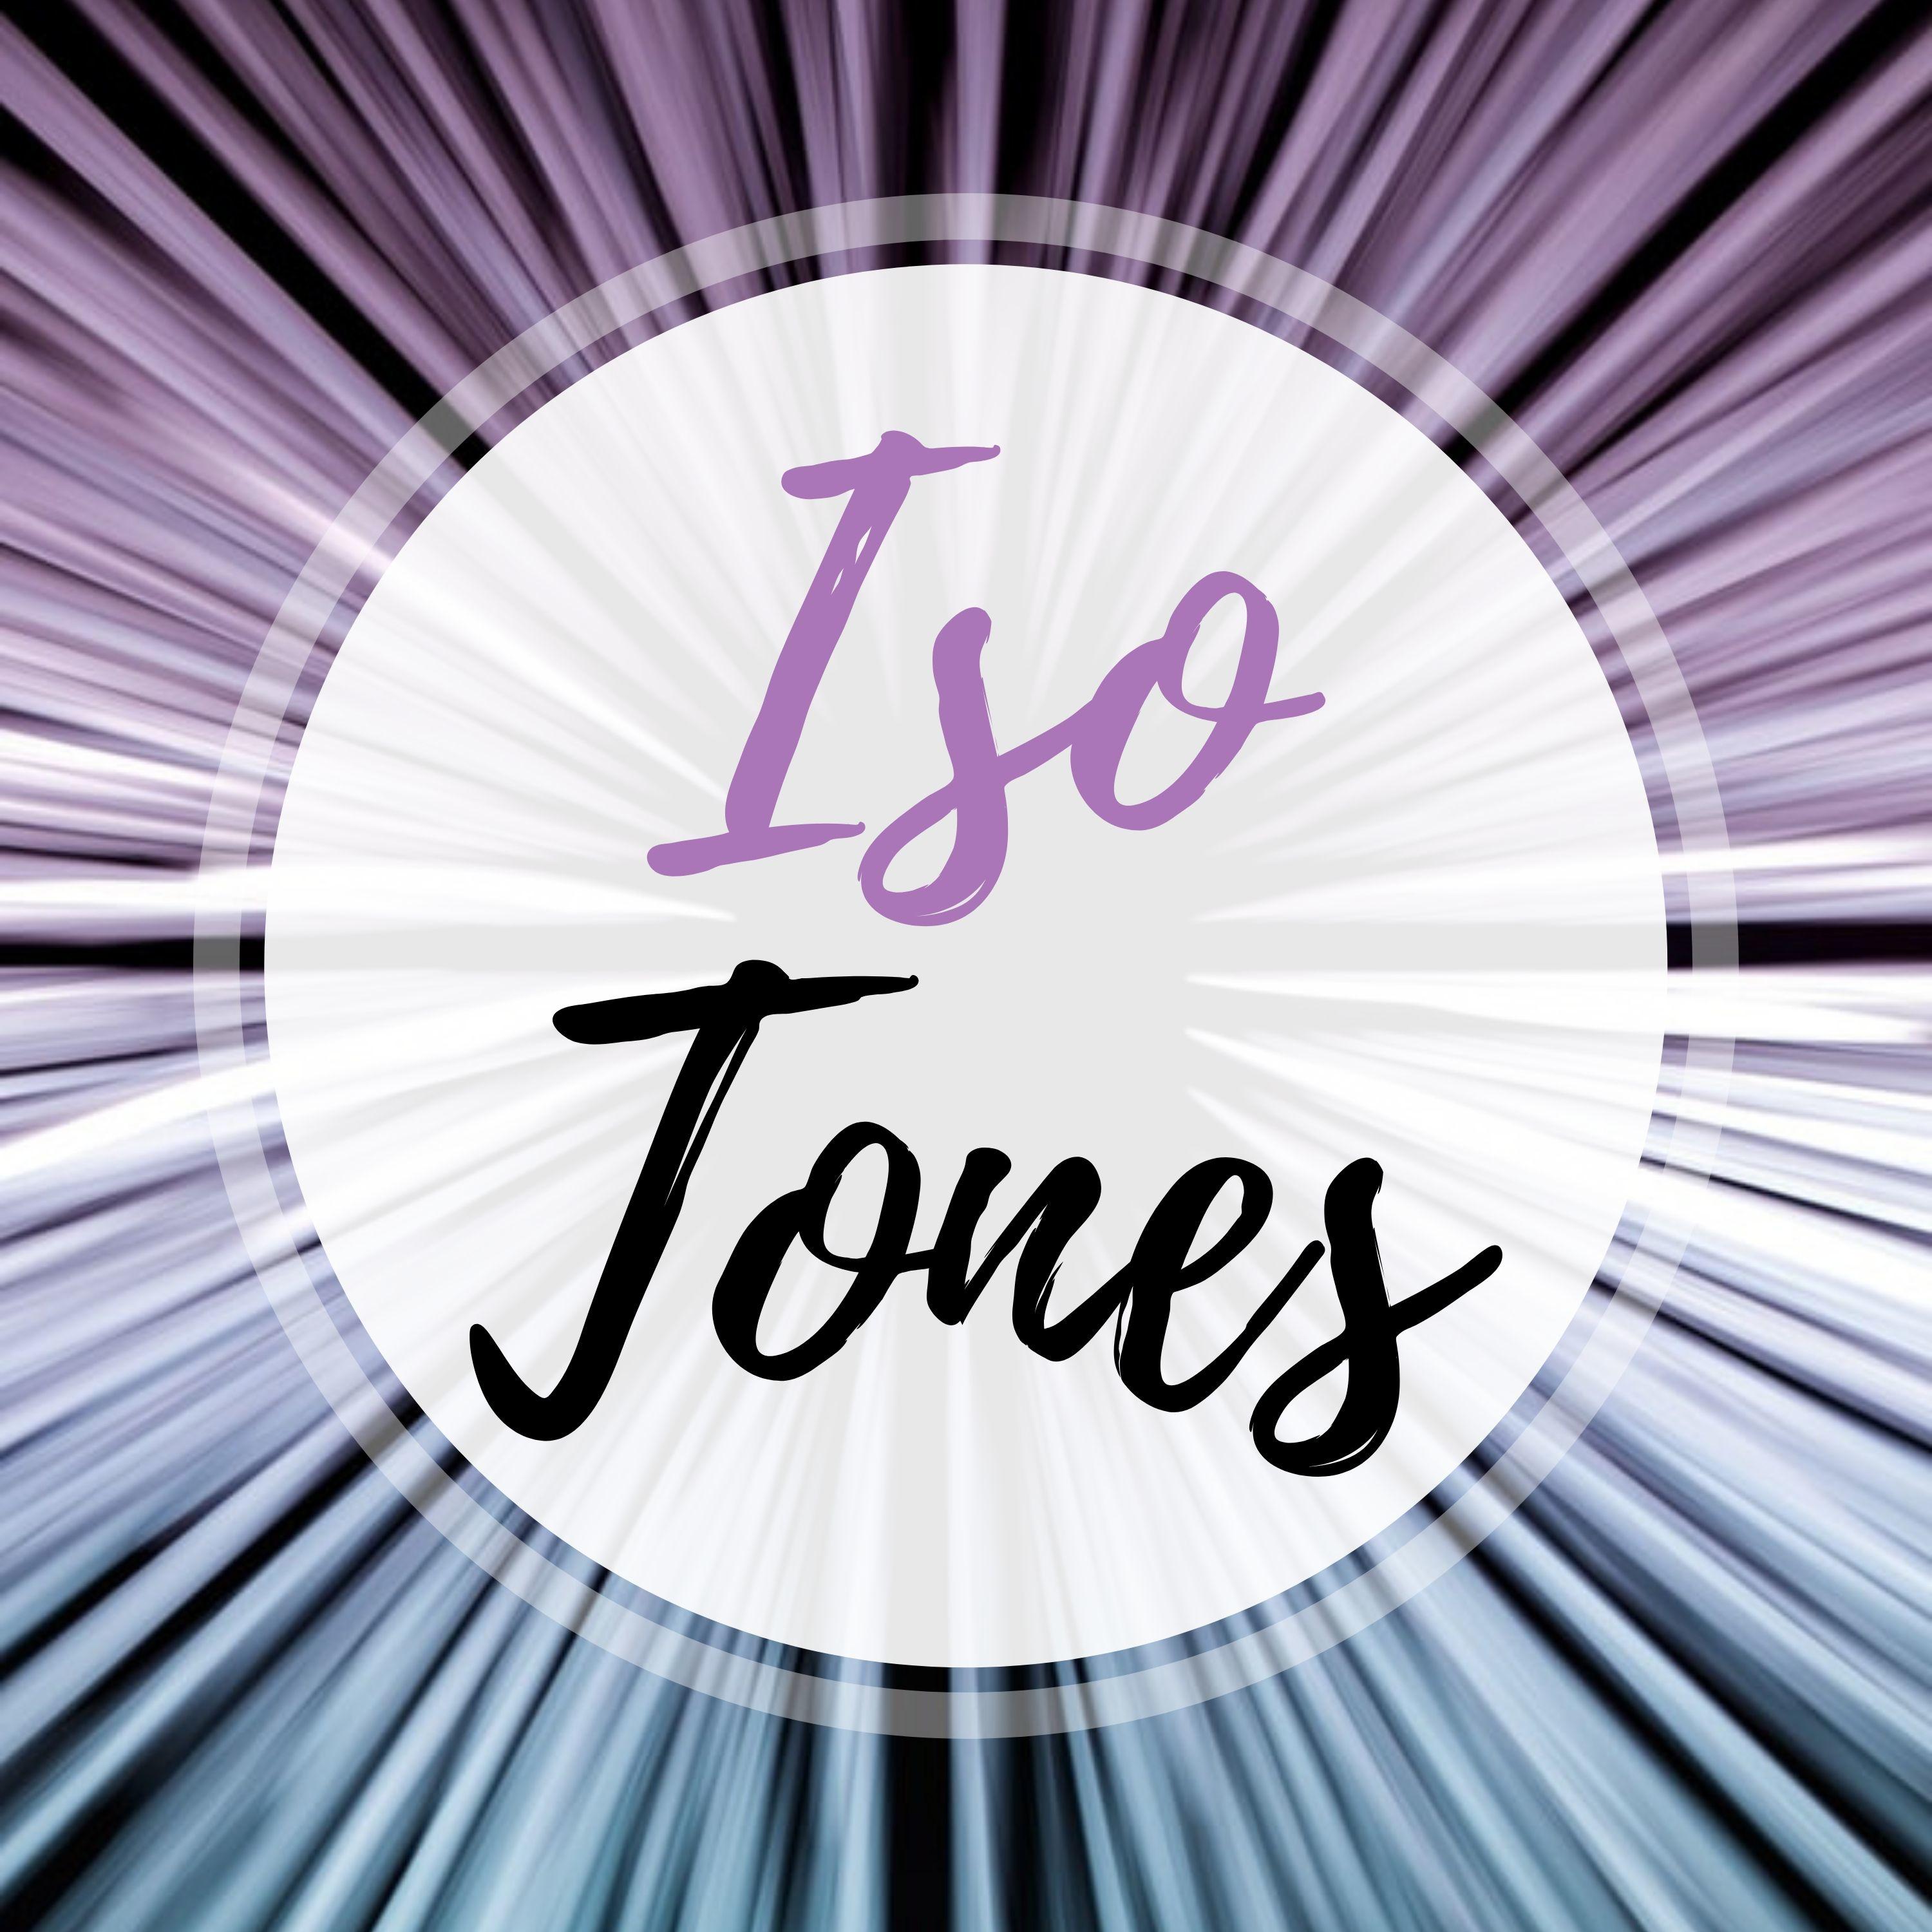 Iso Tones - Delta Range Binaural & Isochronic Tones